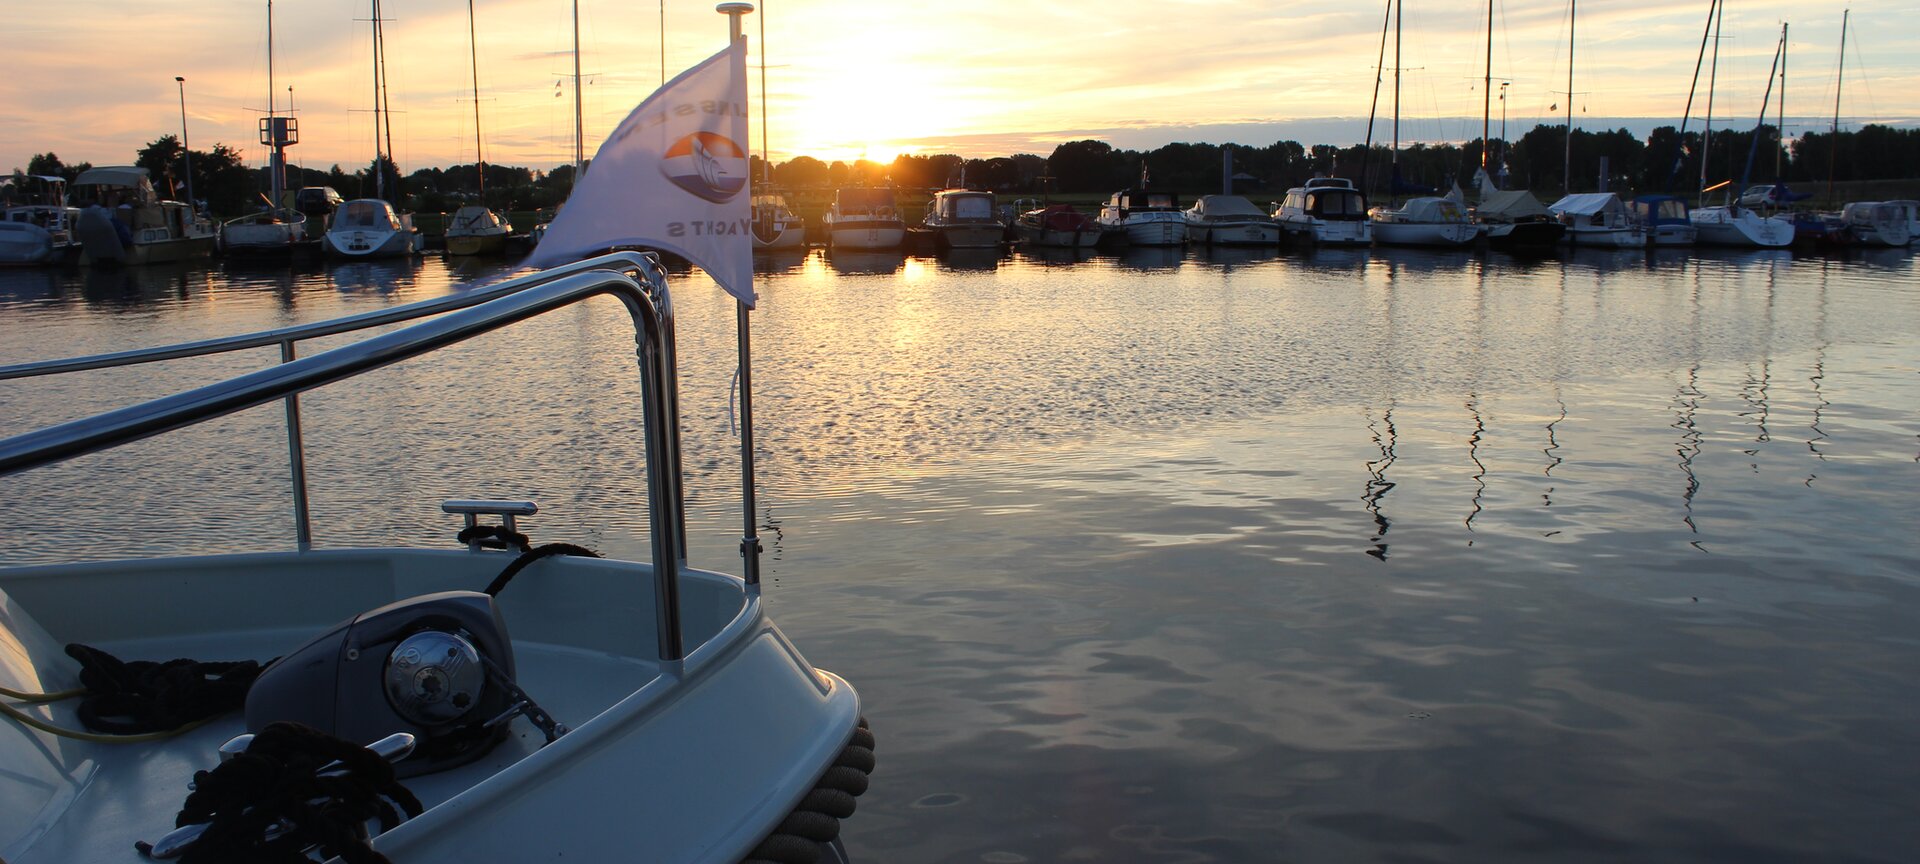 Aqua Libra Yachtcharter - Sundown at our marina "De Spaenjerd" in Kinrooi